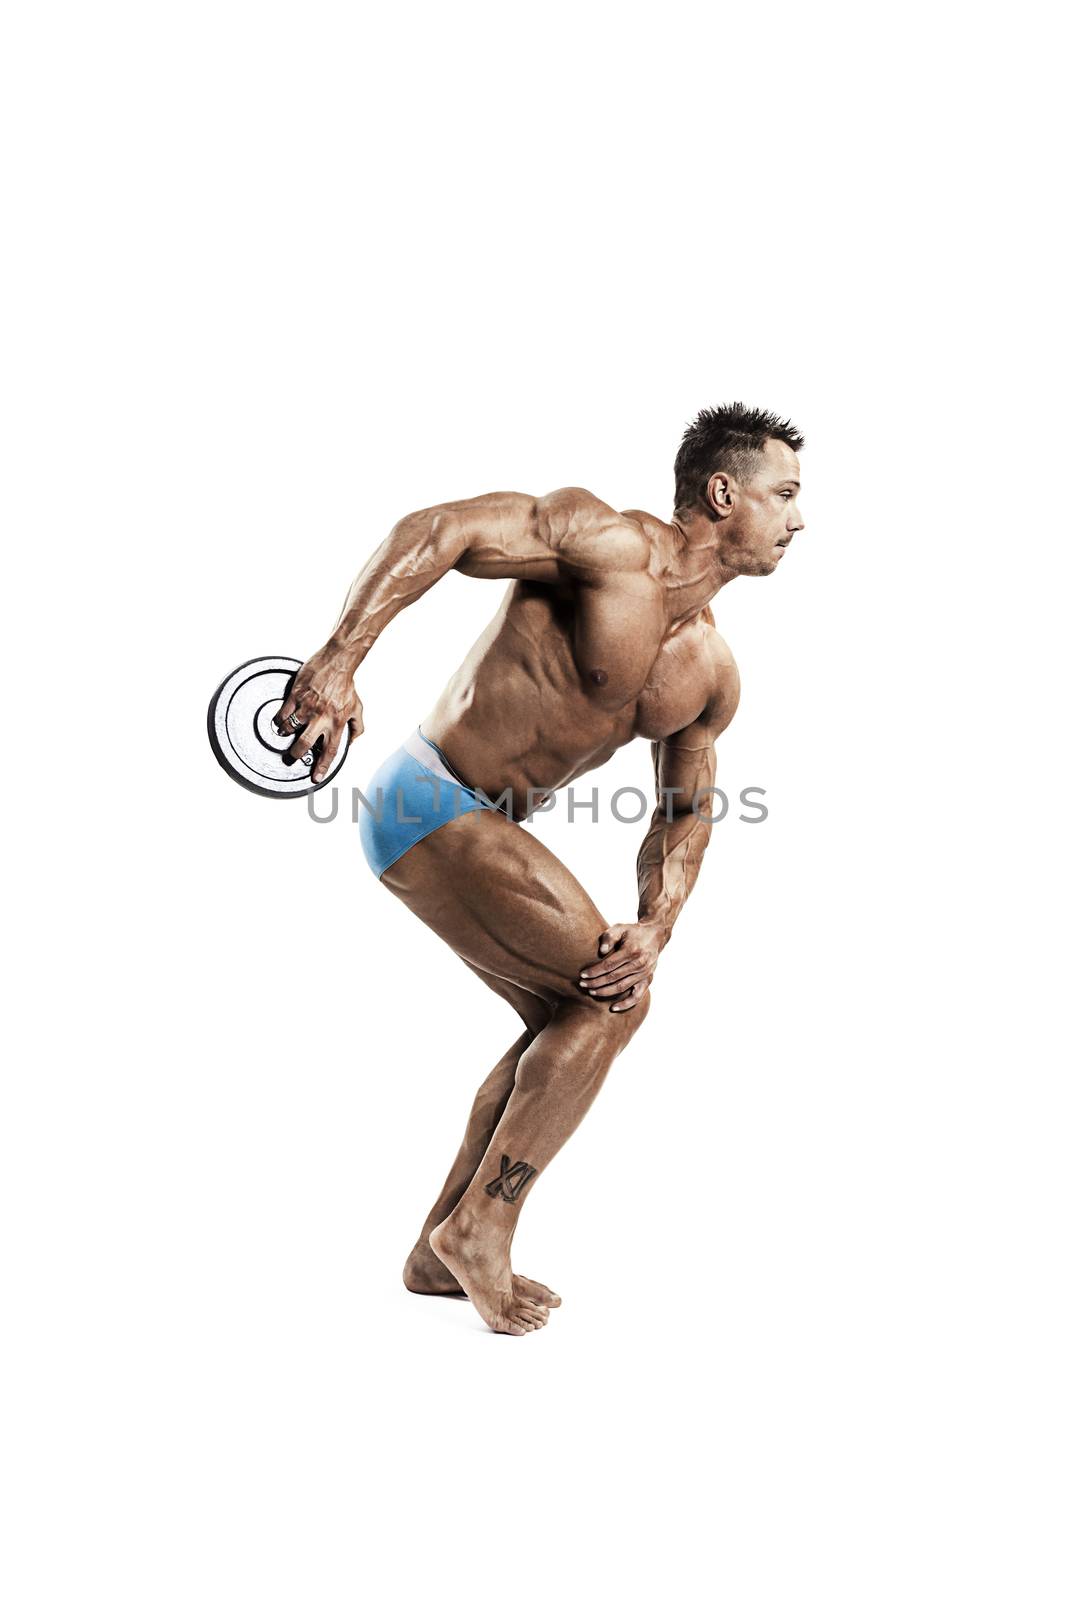 Male bodybuilder by Aarstudio